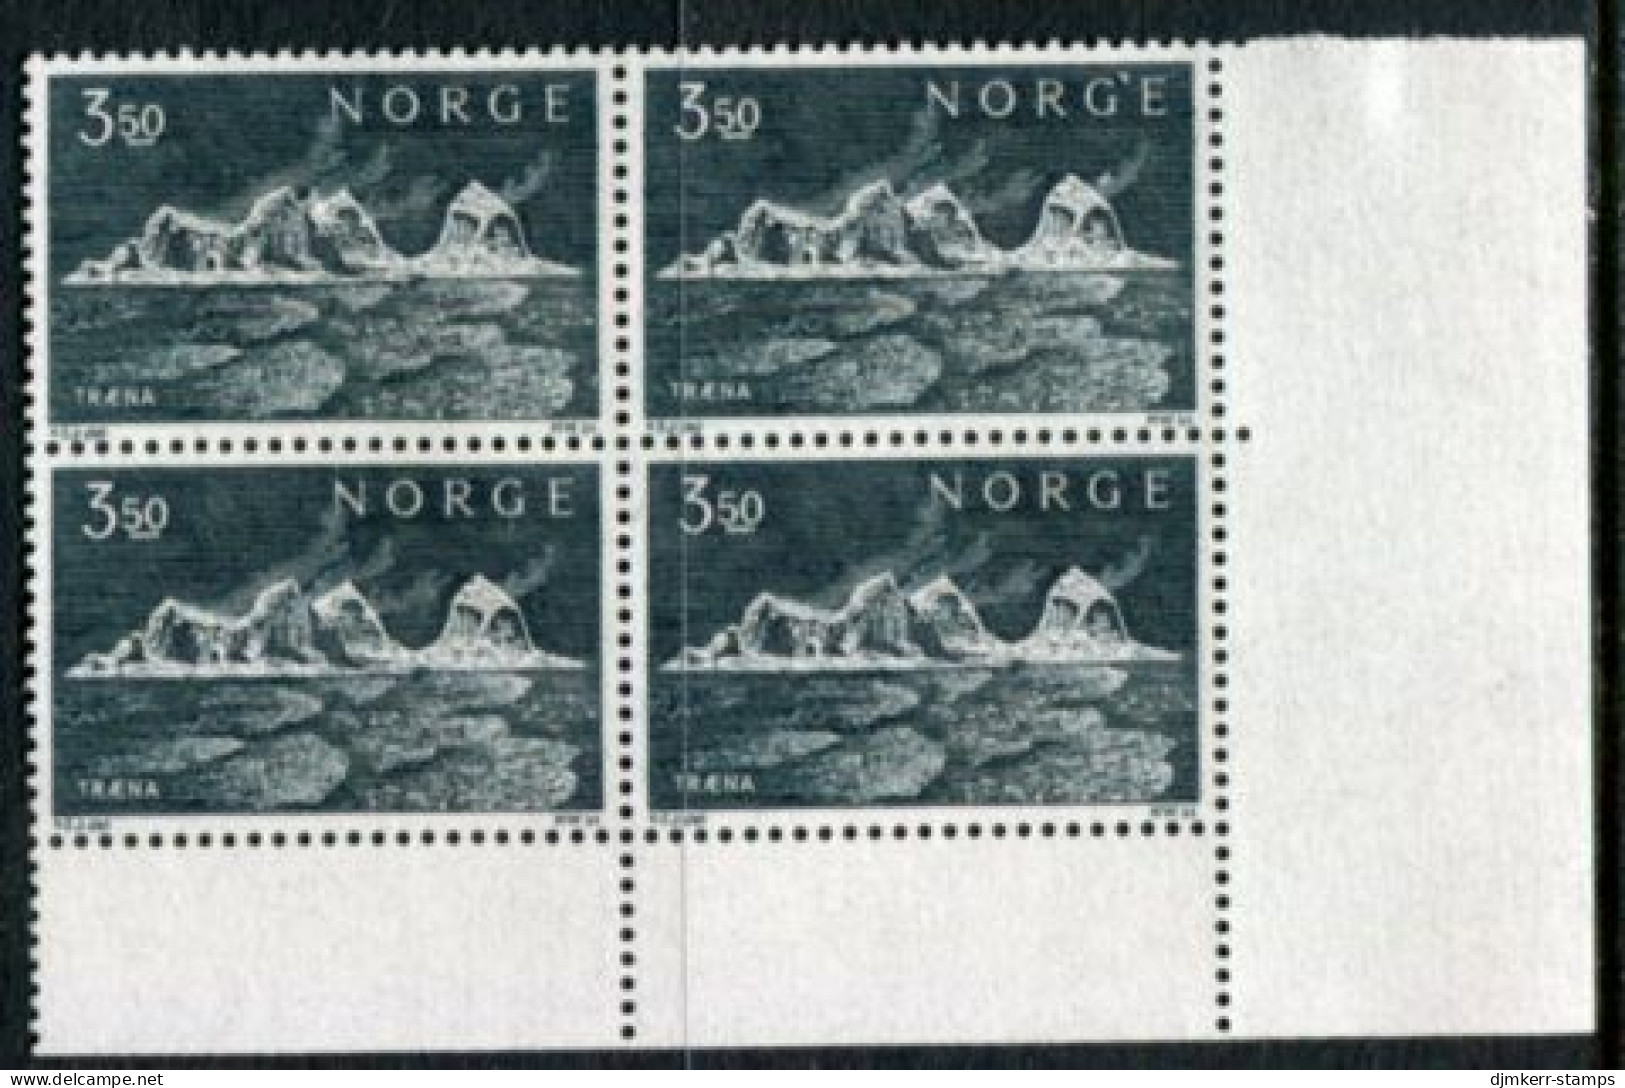 NORWAY 1969 Traena Islands Block Of 4 MNH / **.  Michel 587 - Neufs